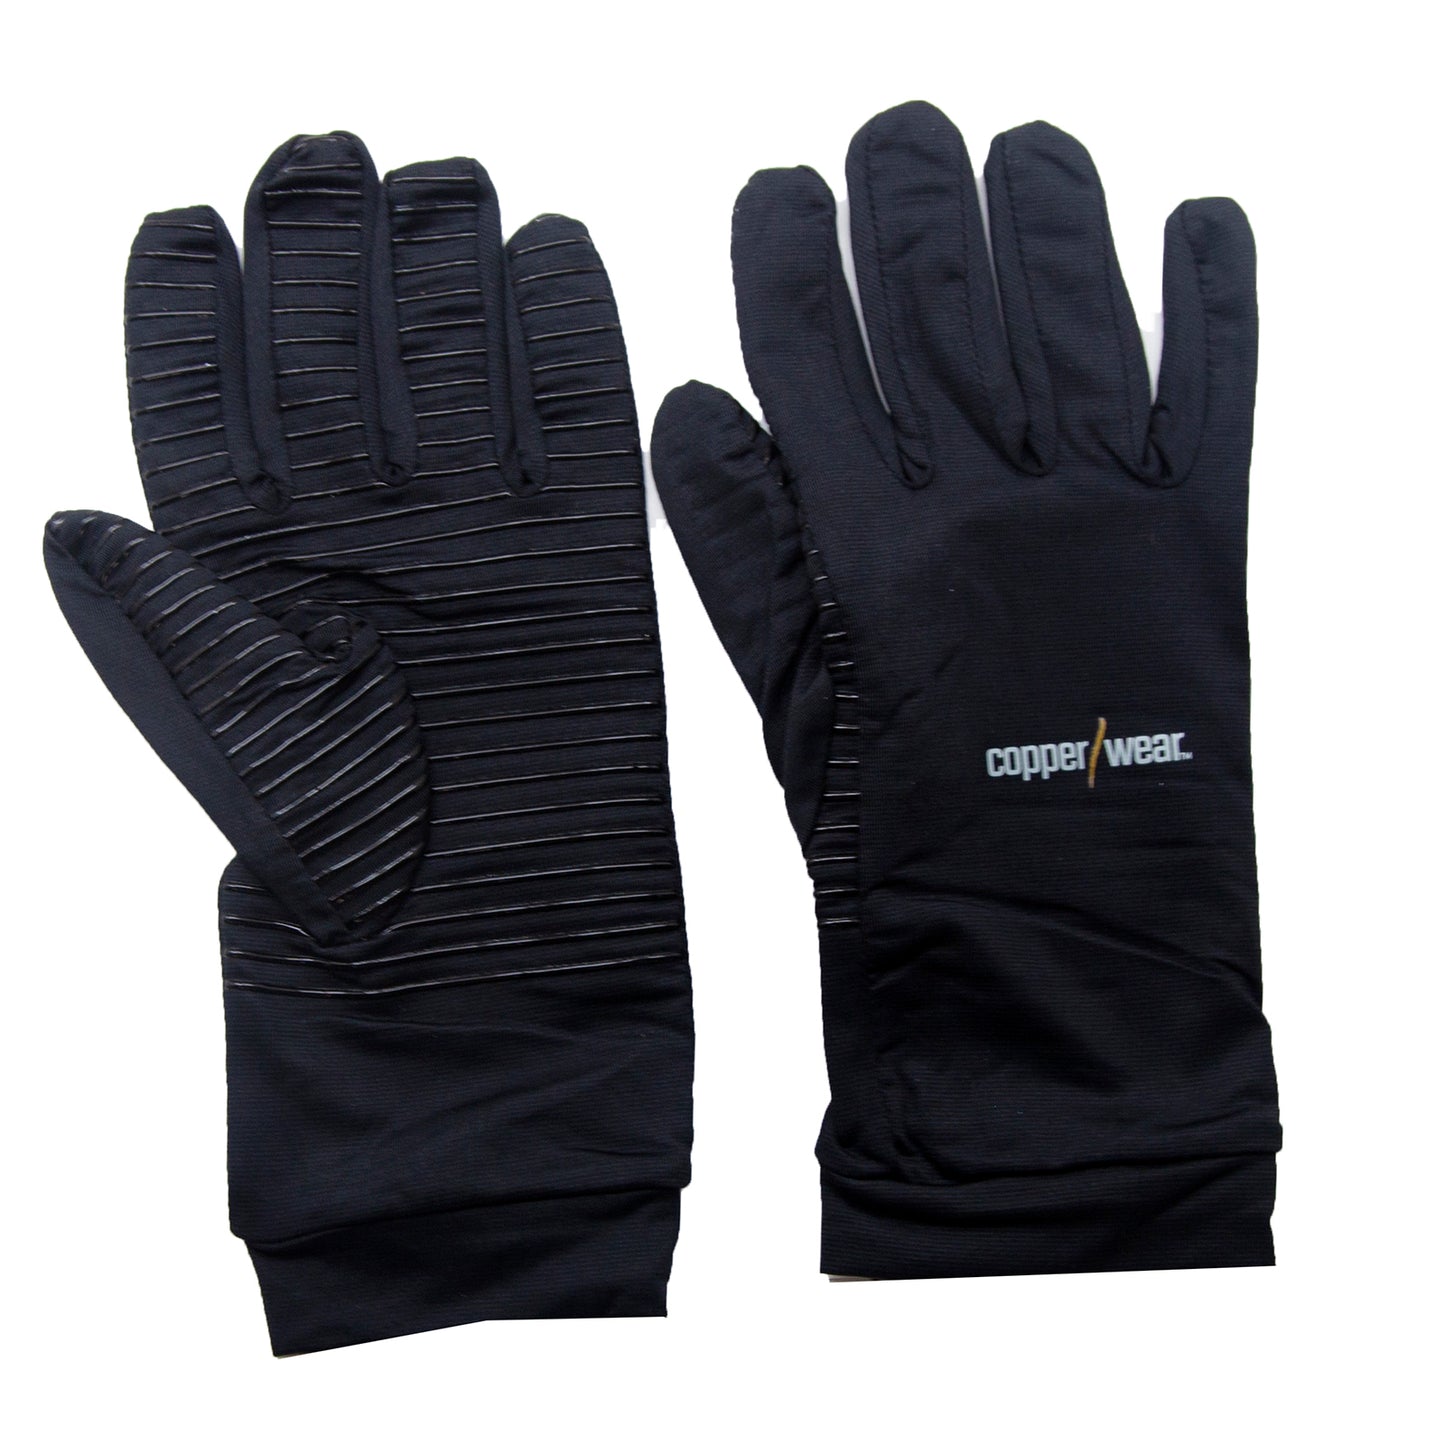 Copper Wear Copper Compression Arthritis Gloves, Medium